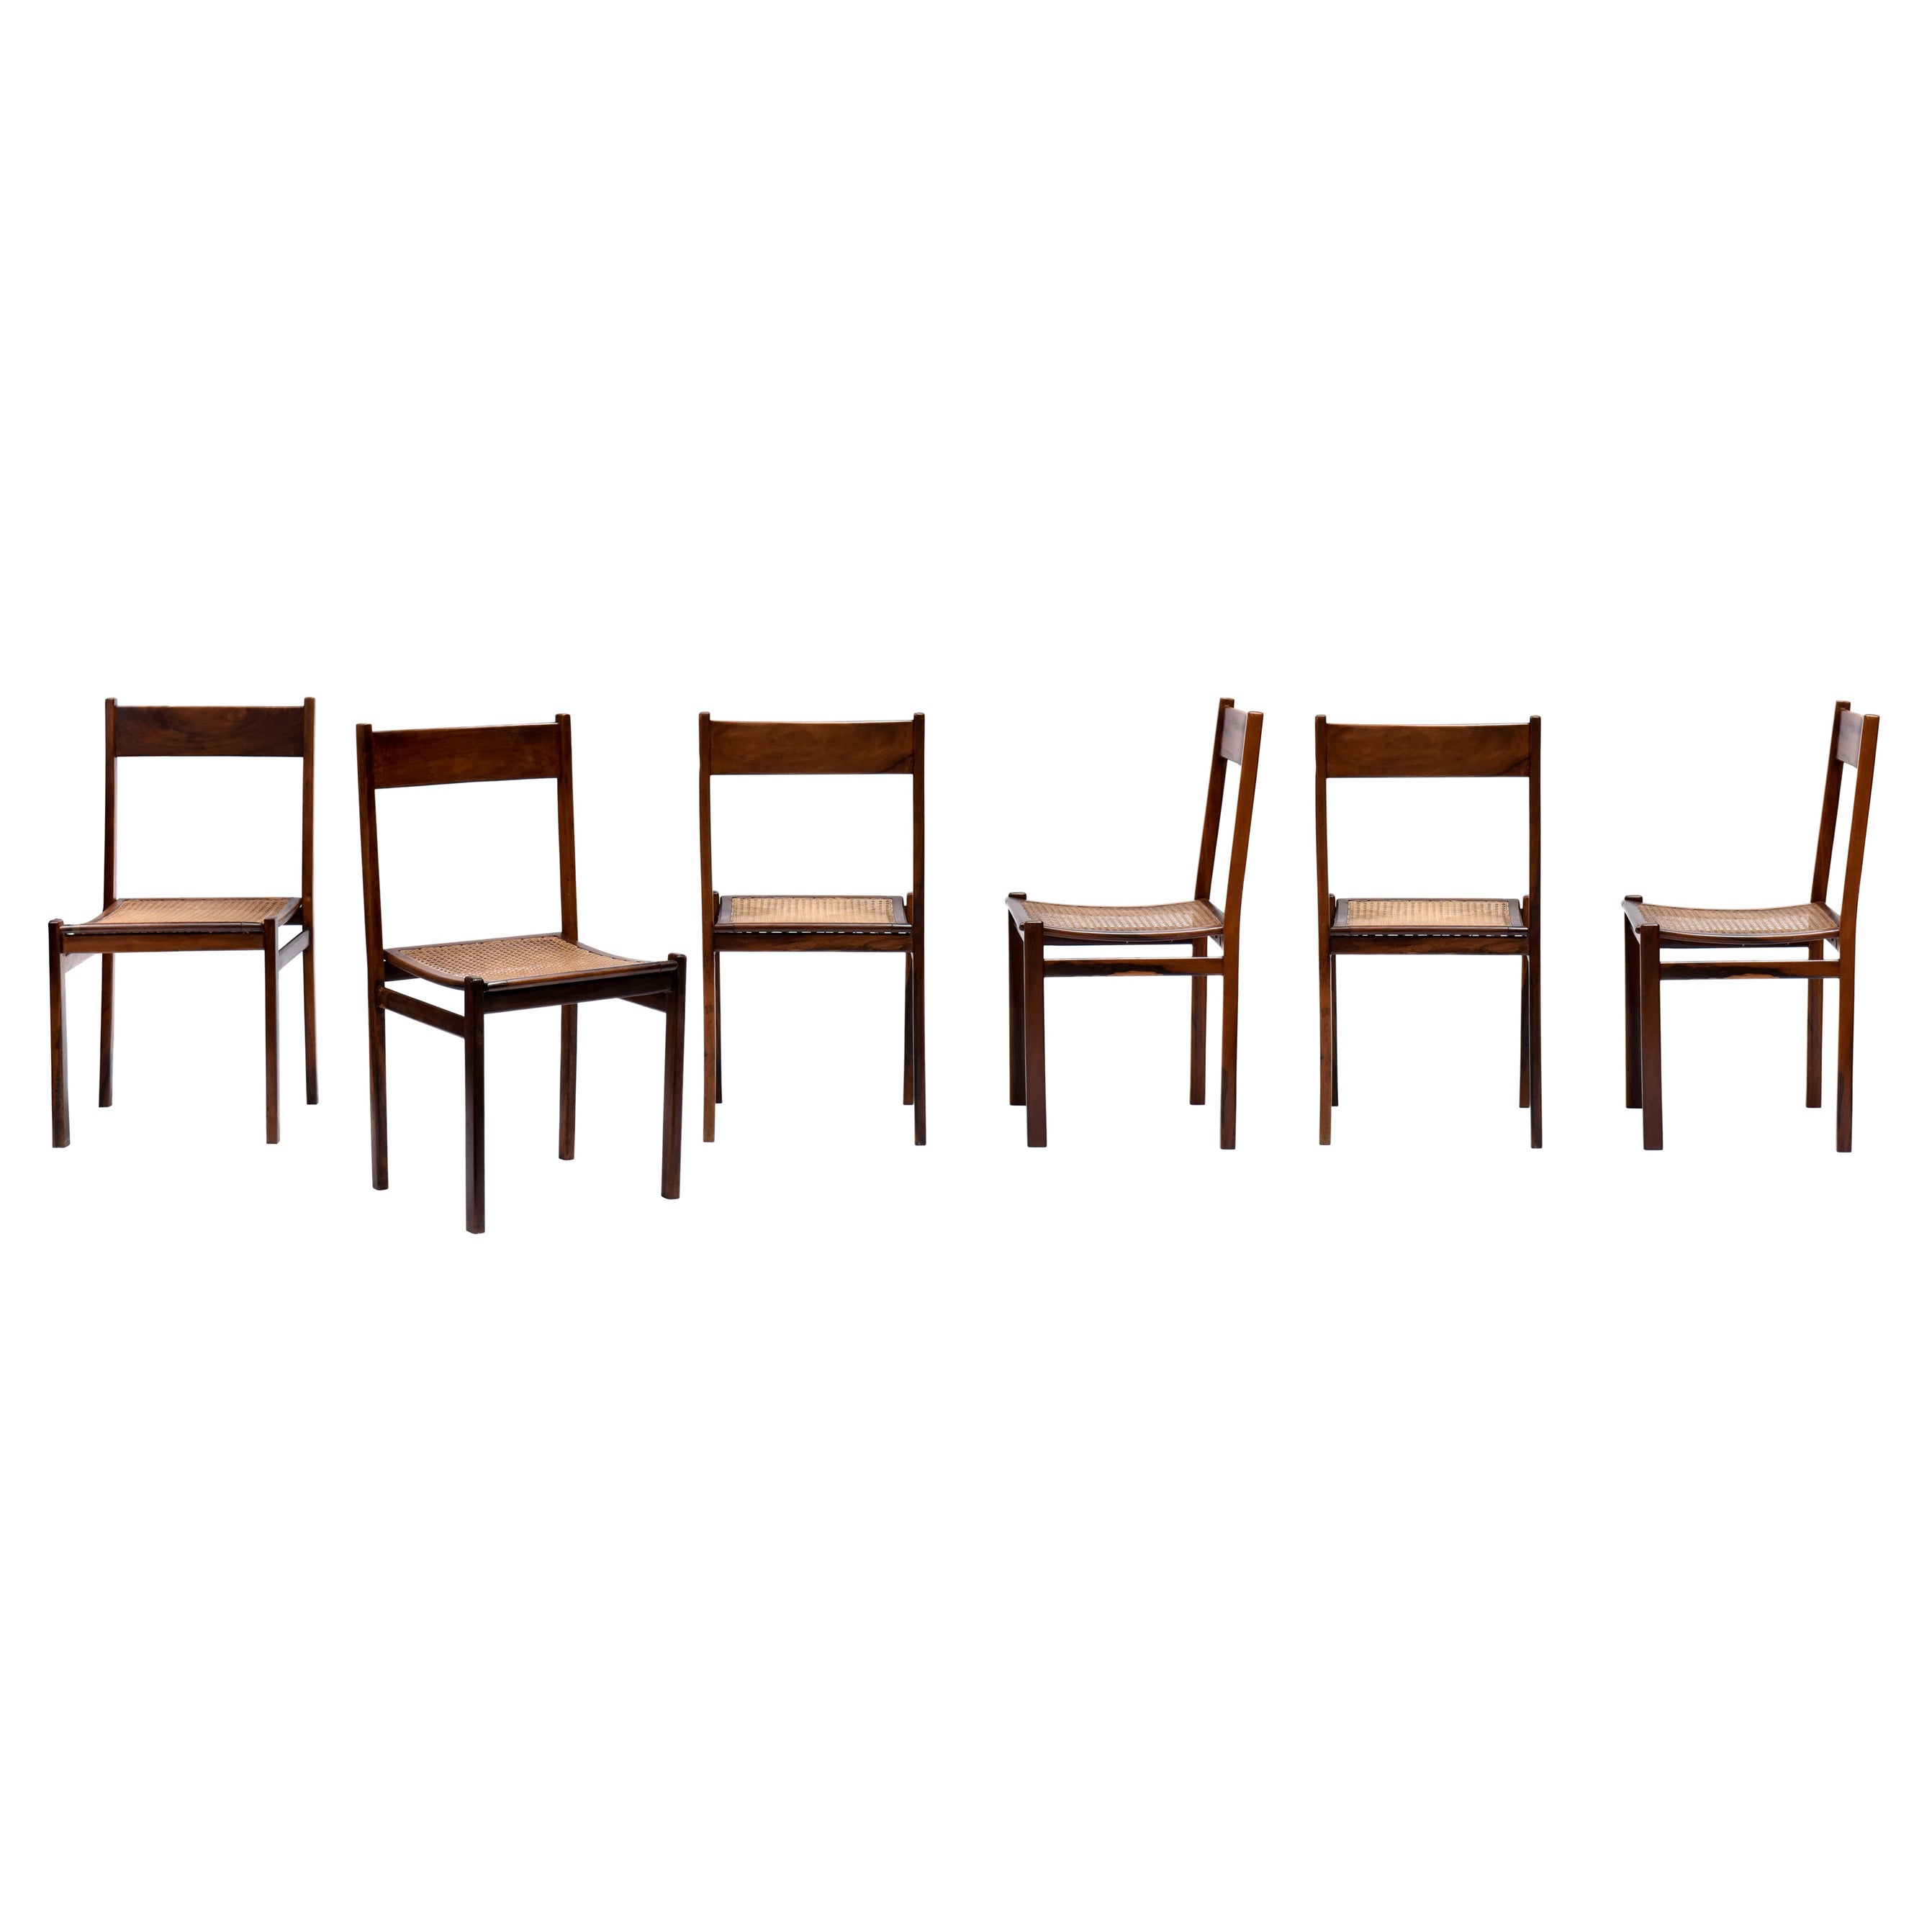 Set of 6 Chairs in Brazilian Wood by Joaquim Tenreiro For Sale